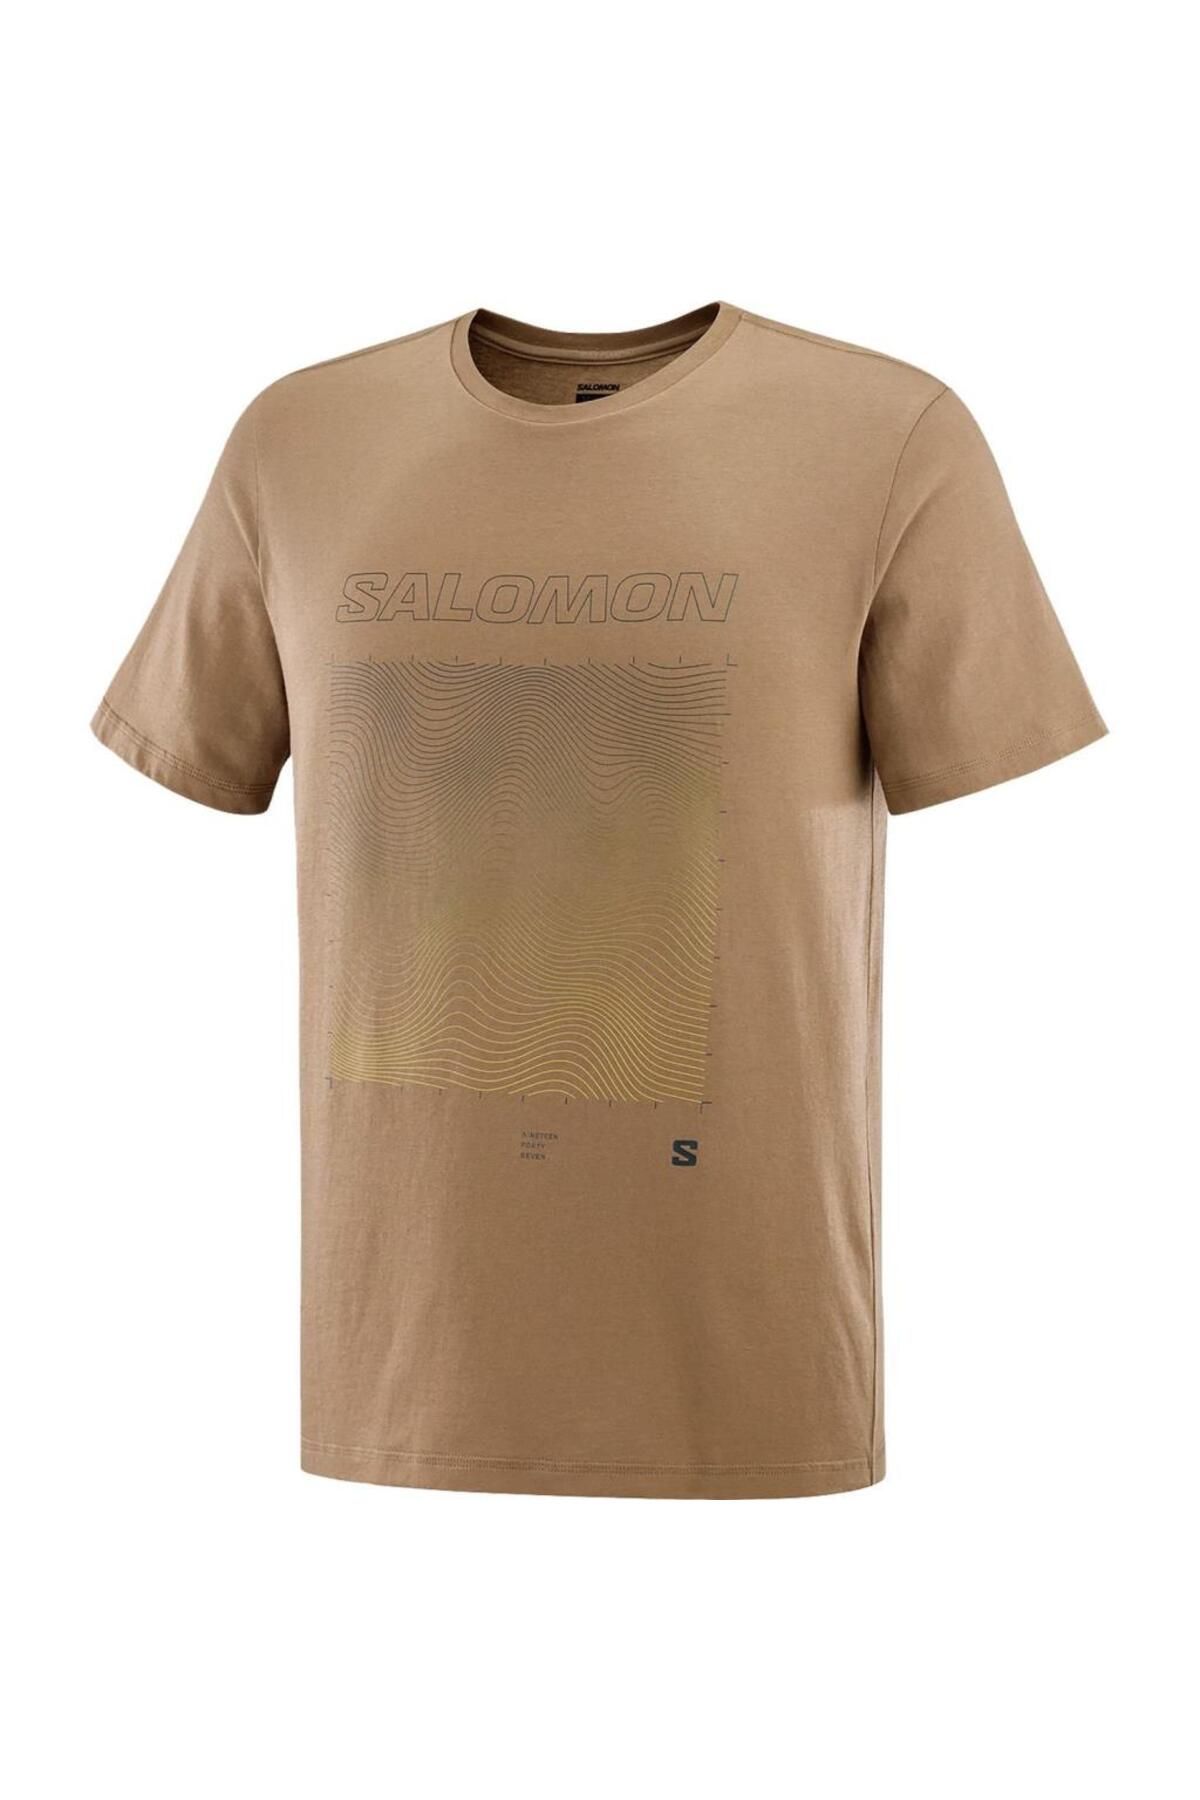 Salomon LC2219200 Graphic SS Tee Tişört Erkek T-Shirt KAHVERENGİ